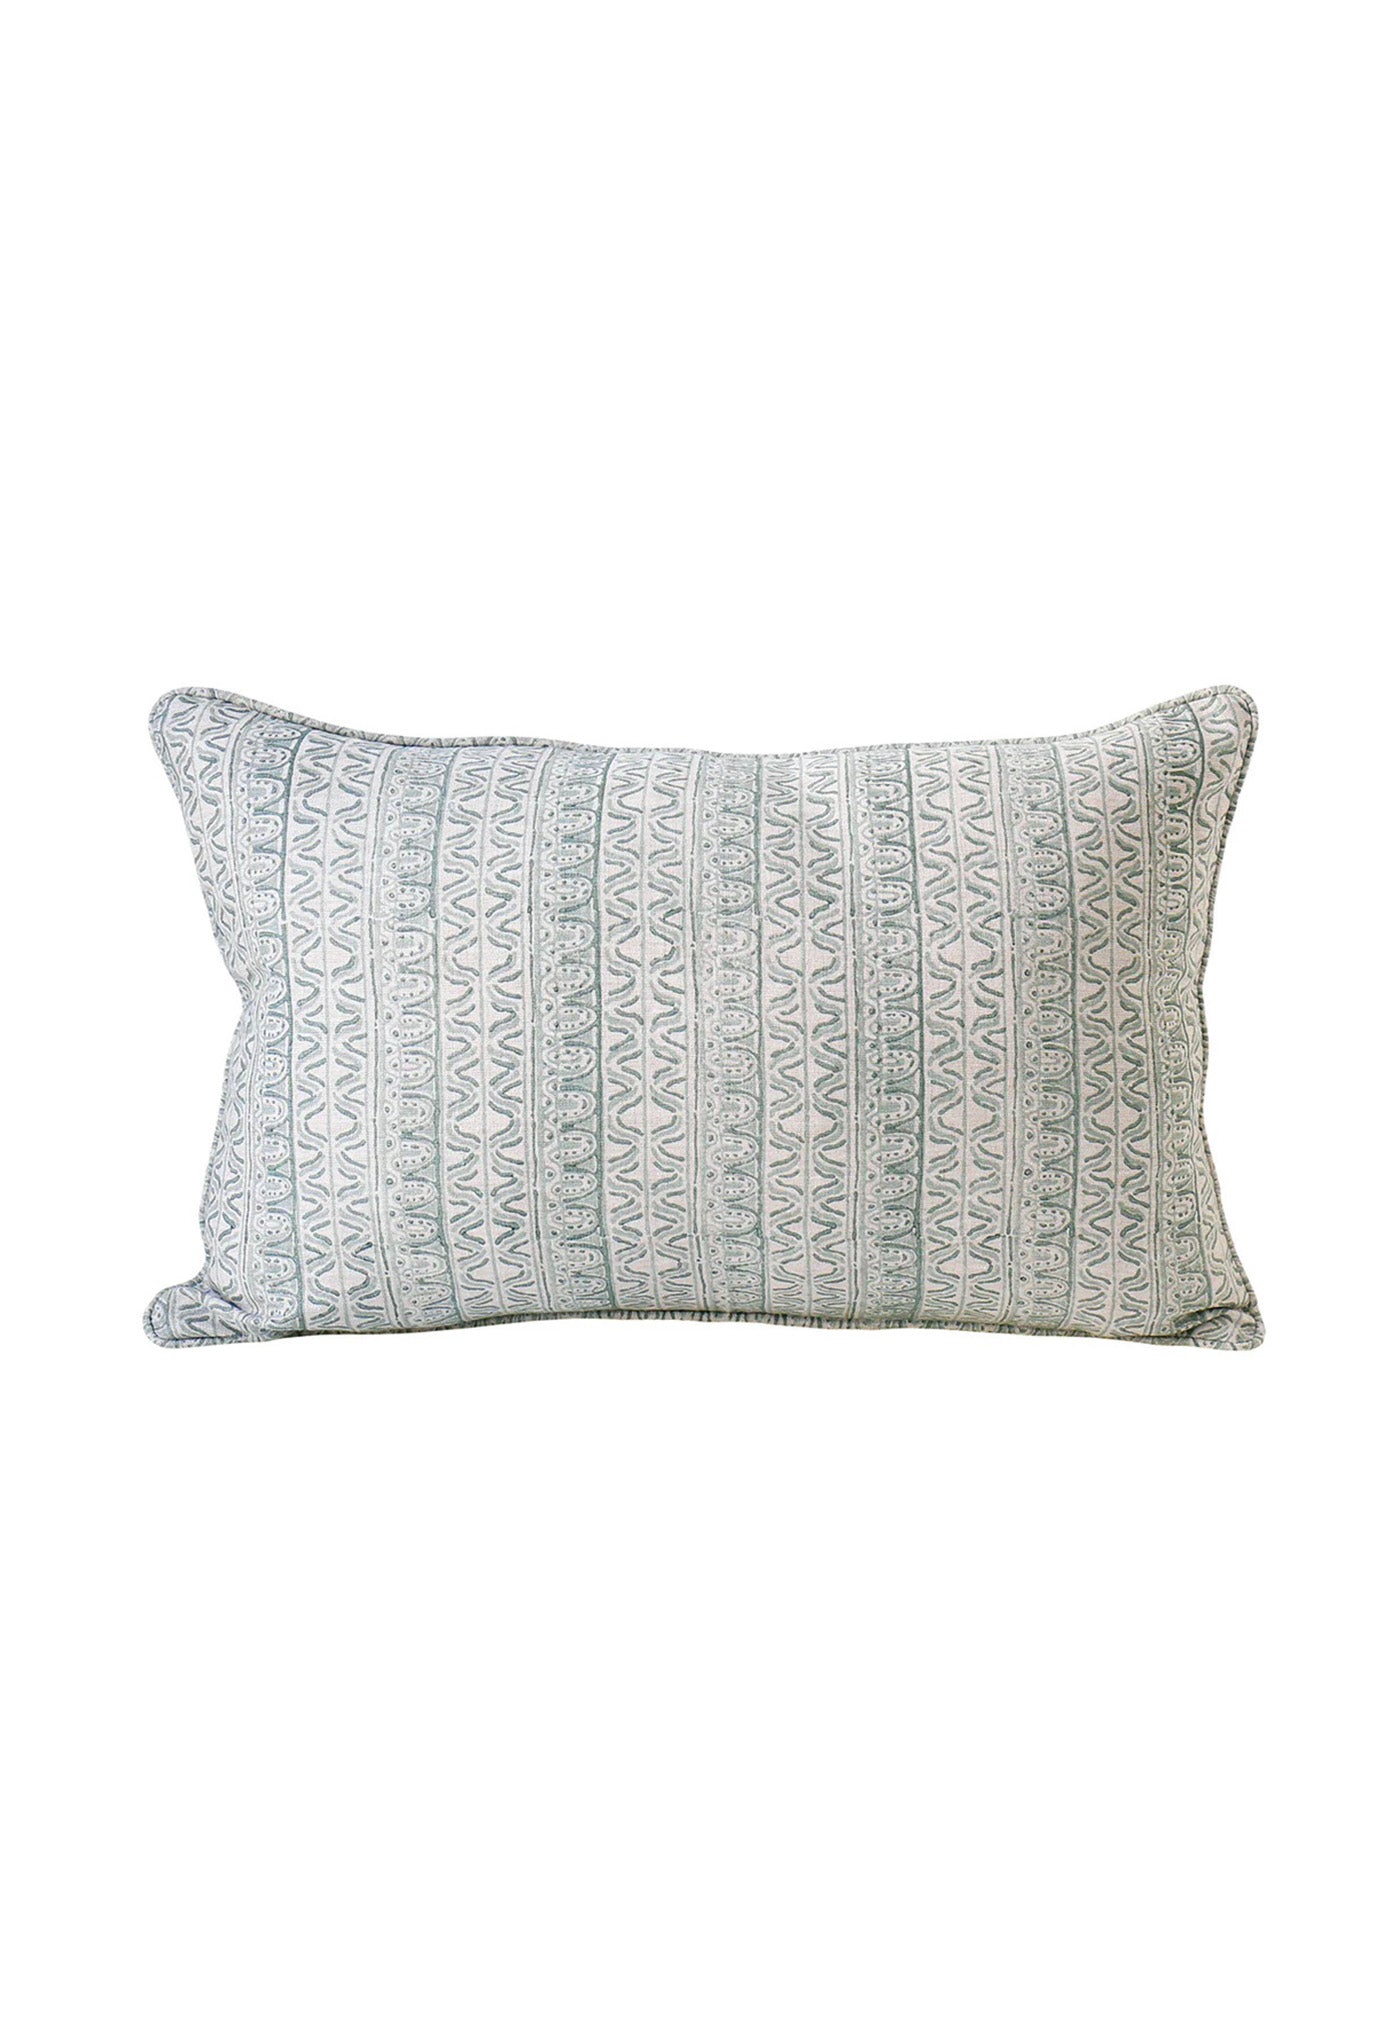 Corfu Celadon Linen Cushion 35x55 sold by Angel Divine